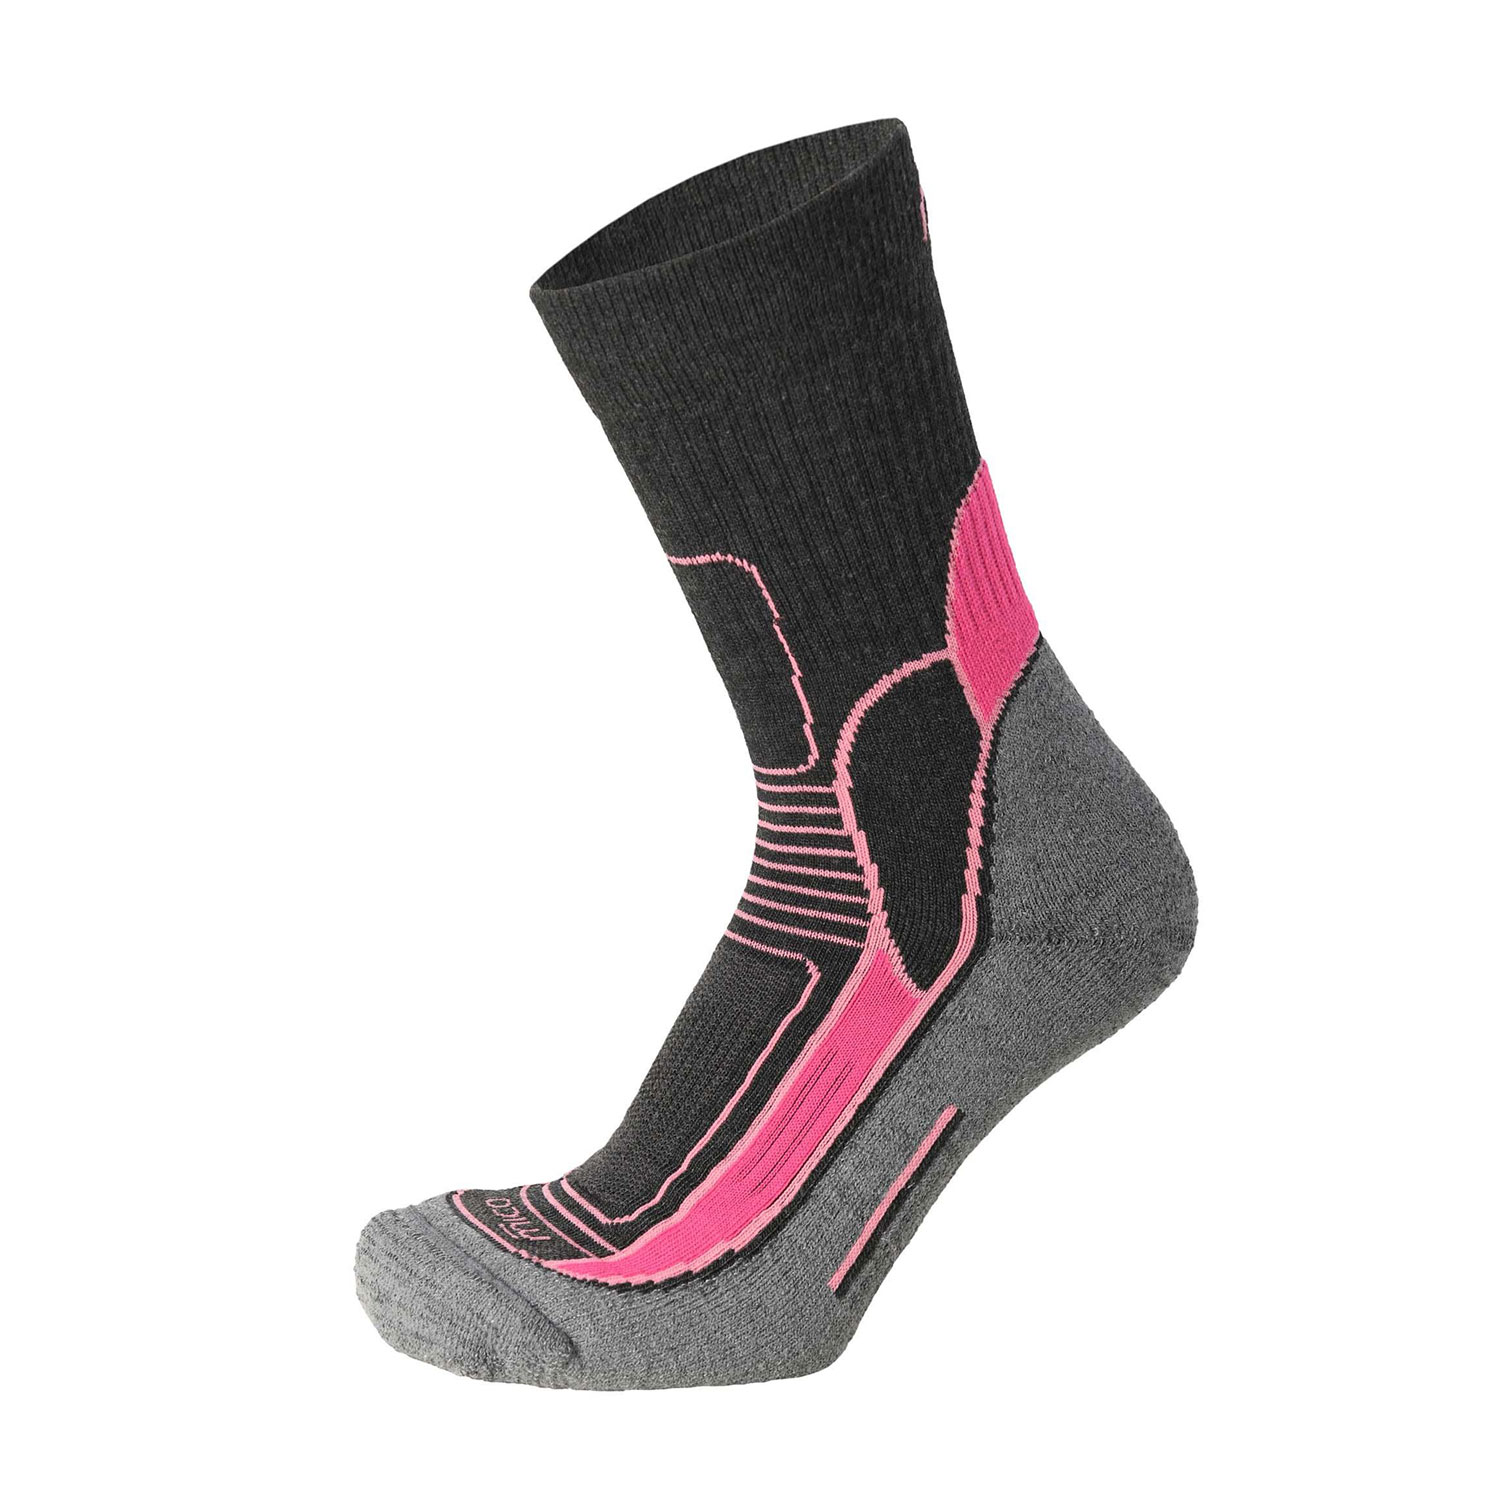 Mico Extra Dry Medium Weight Socks Woman - Antracite Melange/Fucsia